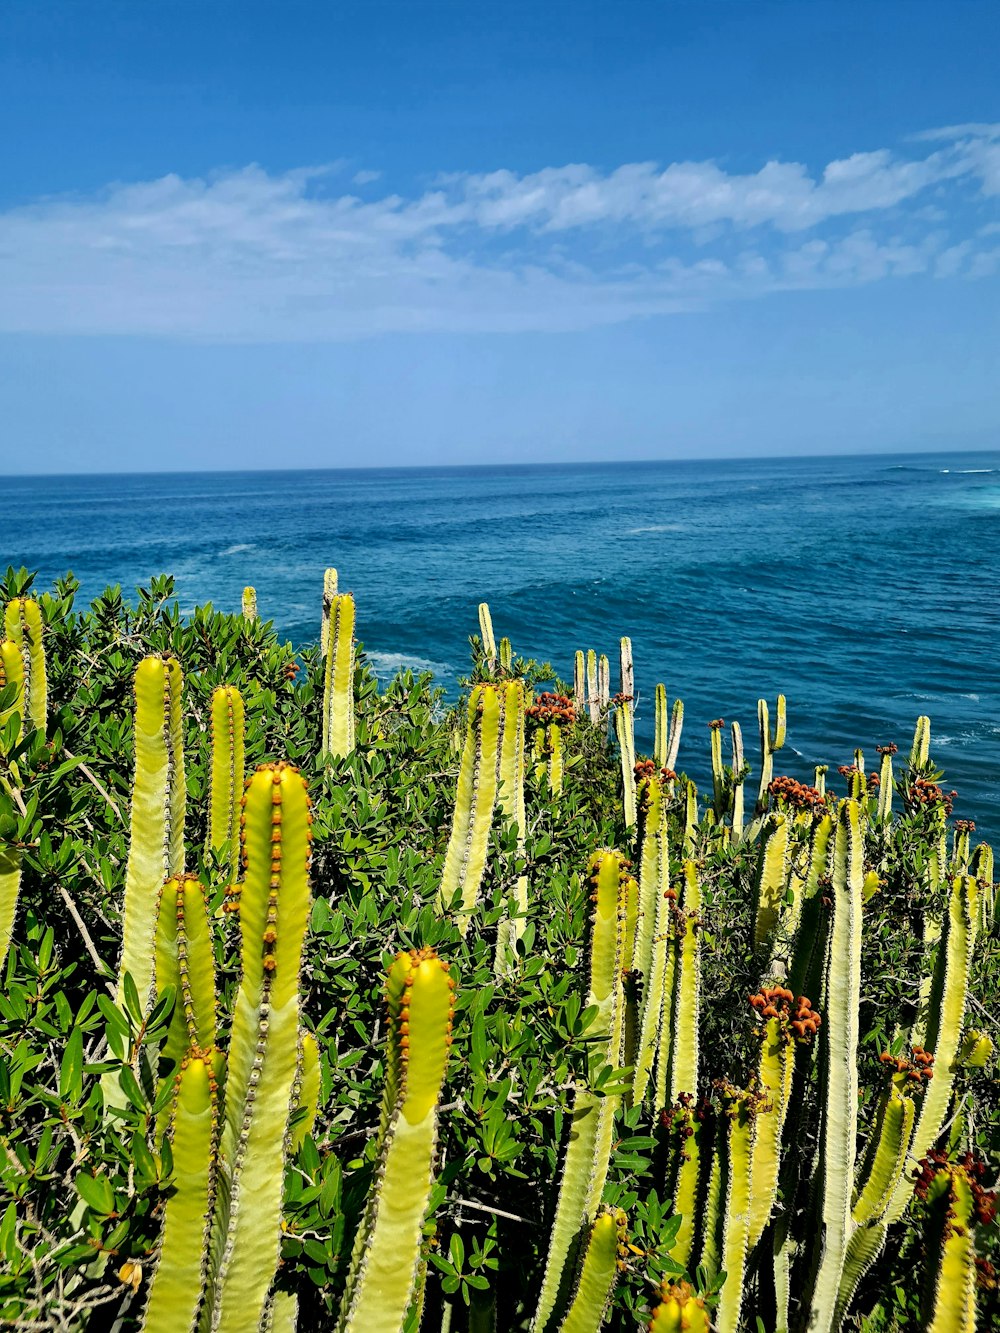 a bunch of cactus plants near the ocean